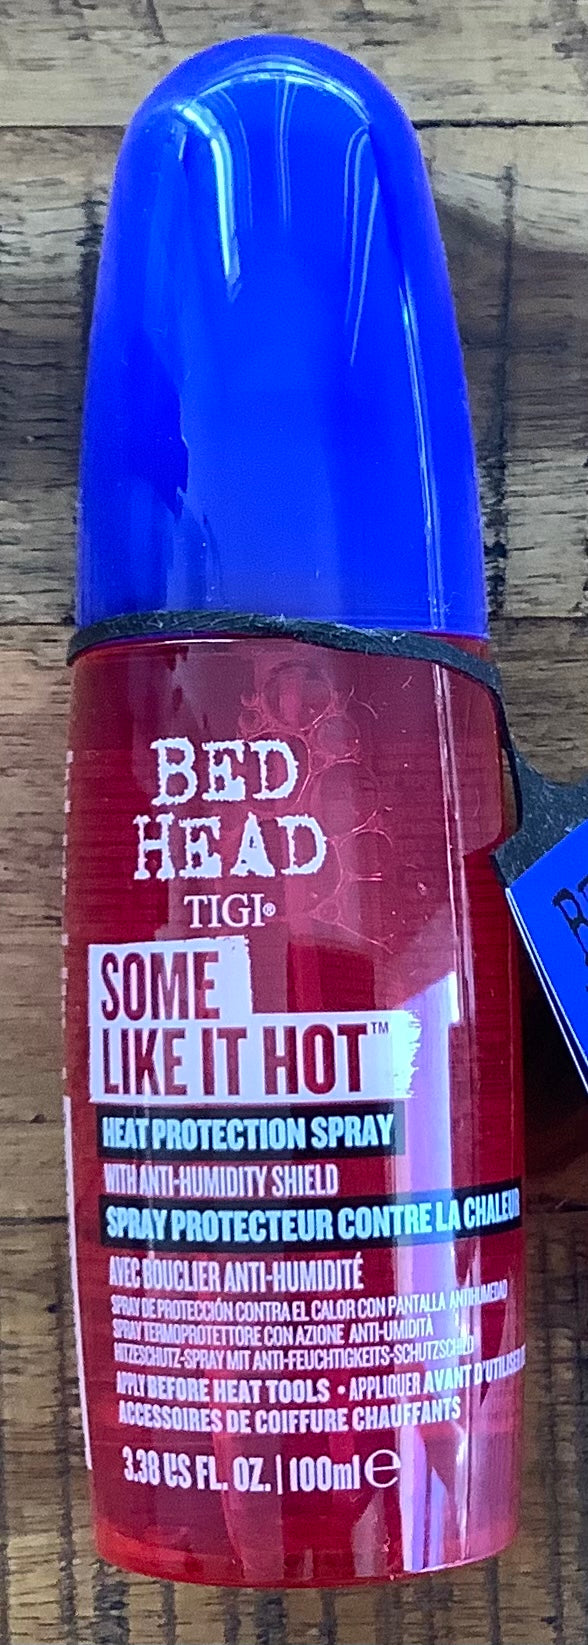 Bed Head Tigi Some Like it Hot